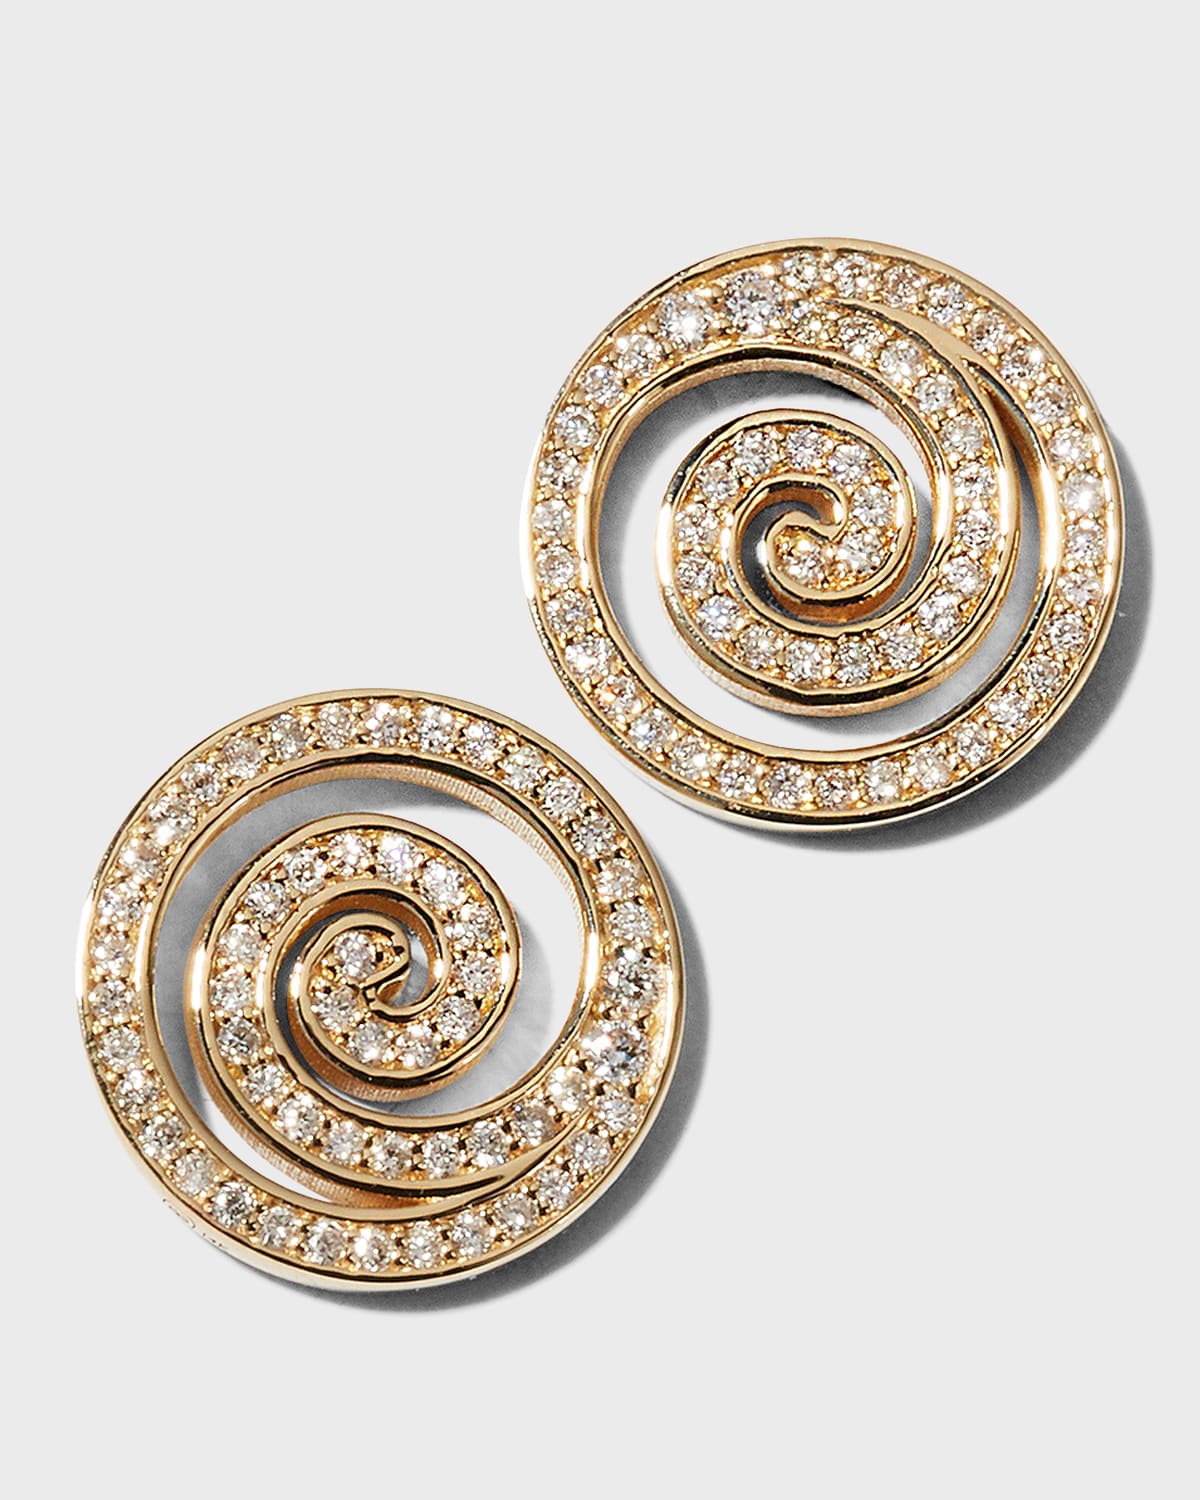 1.54 in x 0.71 in 14K Two-tone Circle Swirl Dangle Earrings